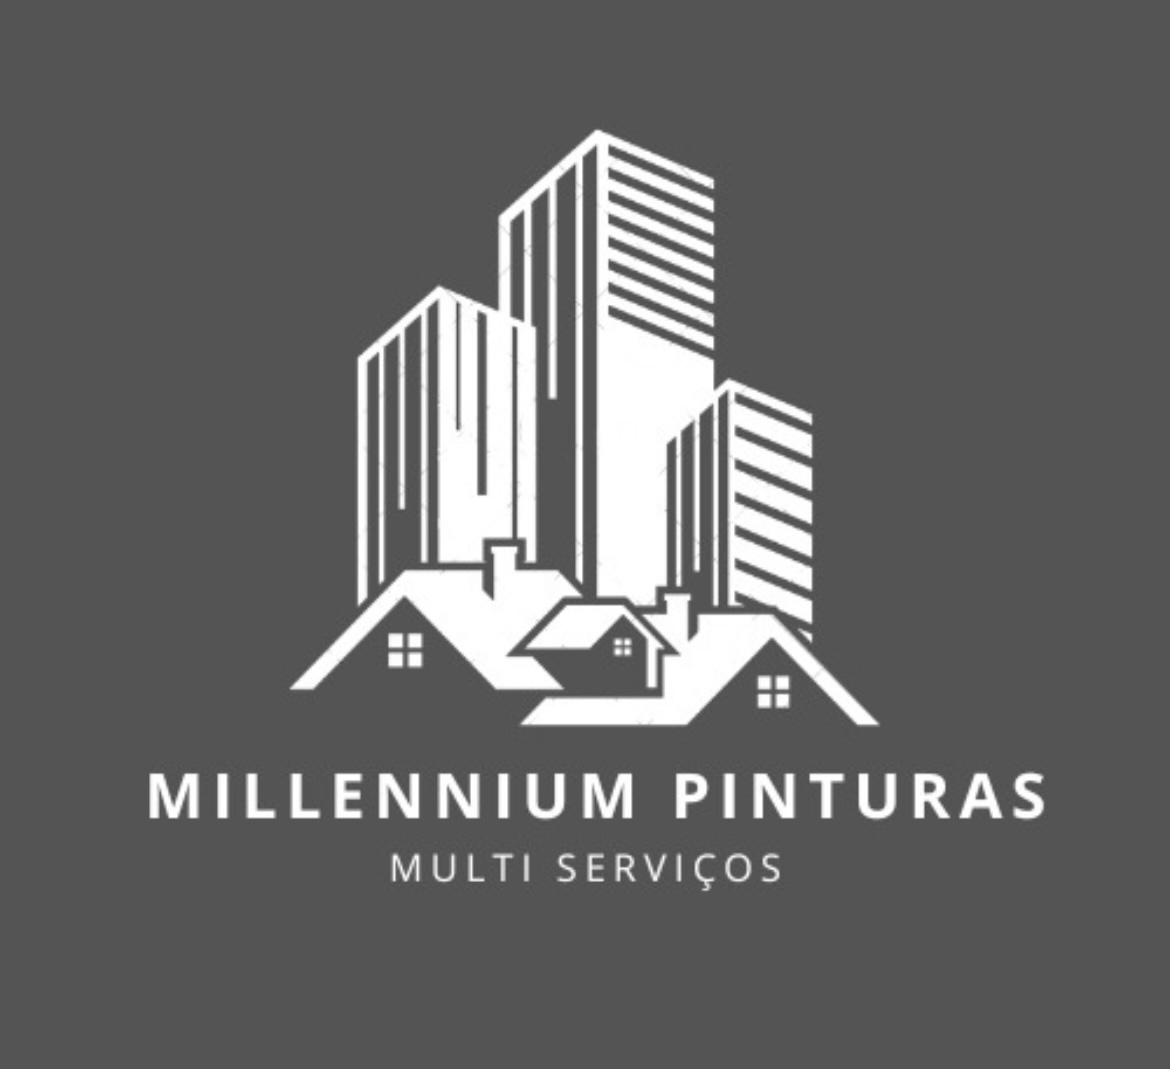 Millennium pinturas Multi serviços - Tavira - Pintura Exterior